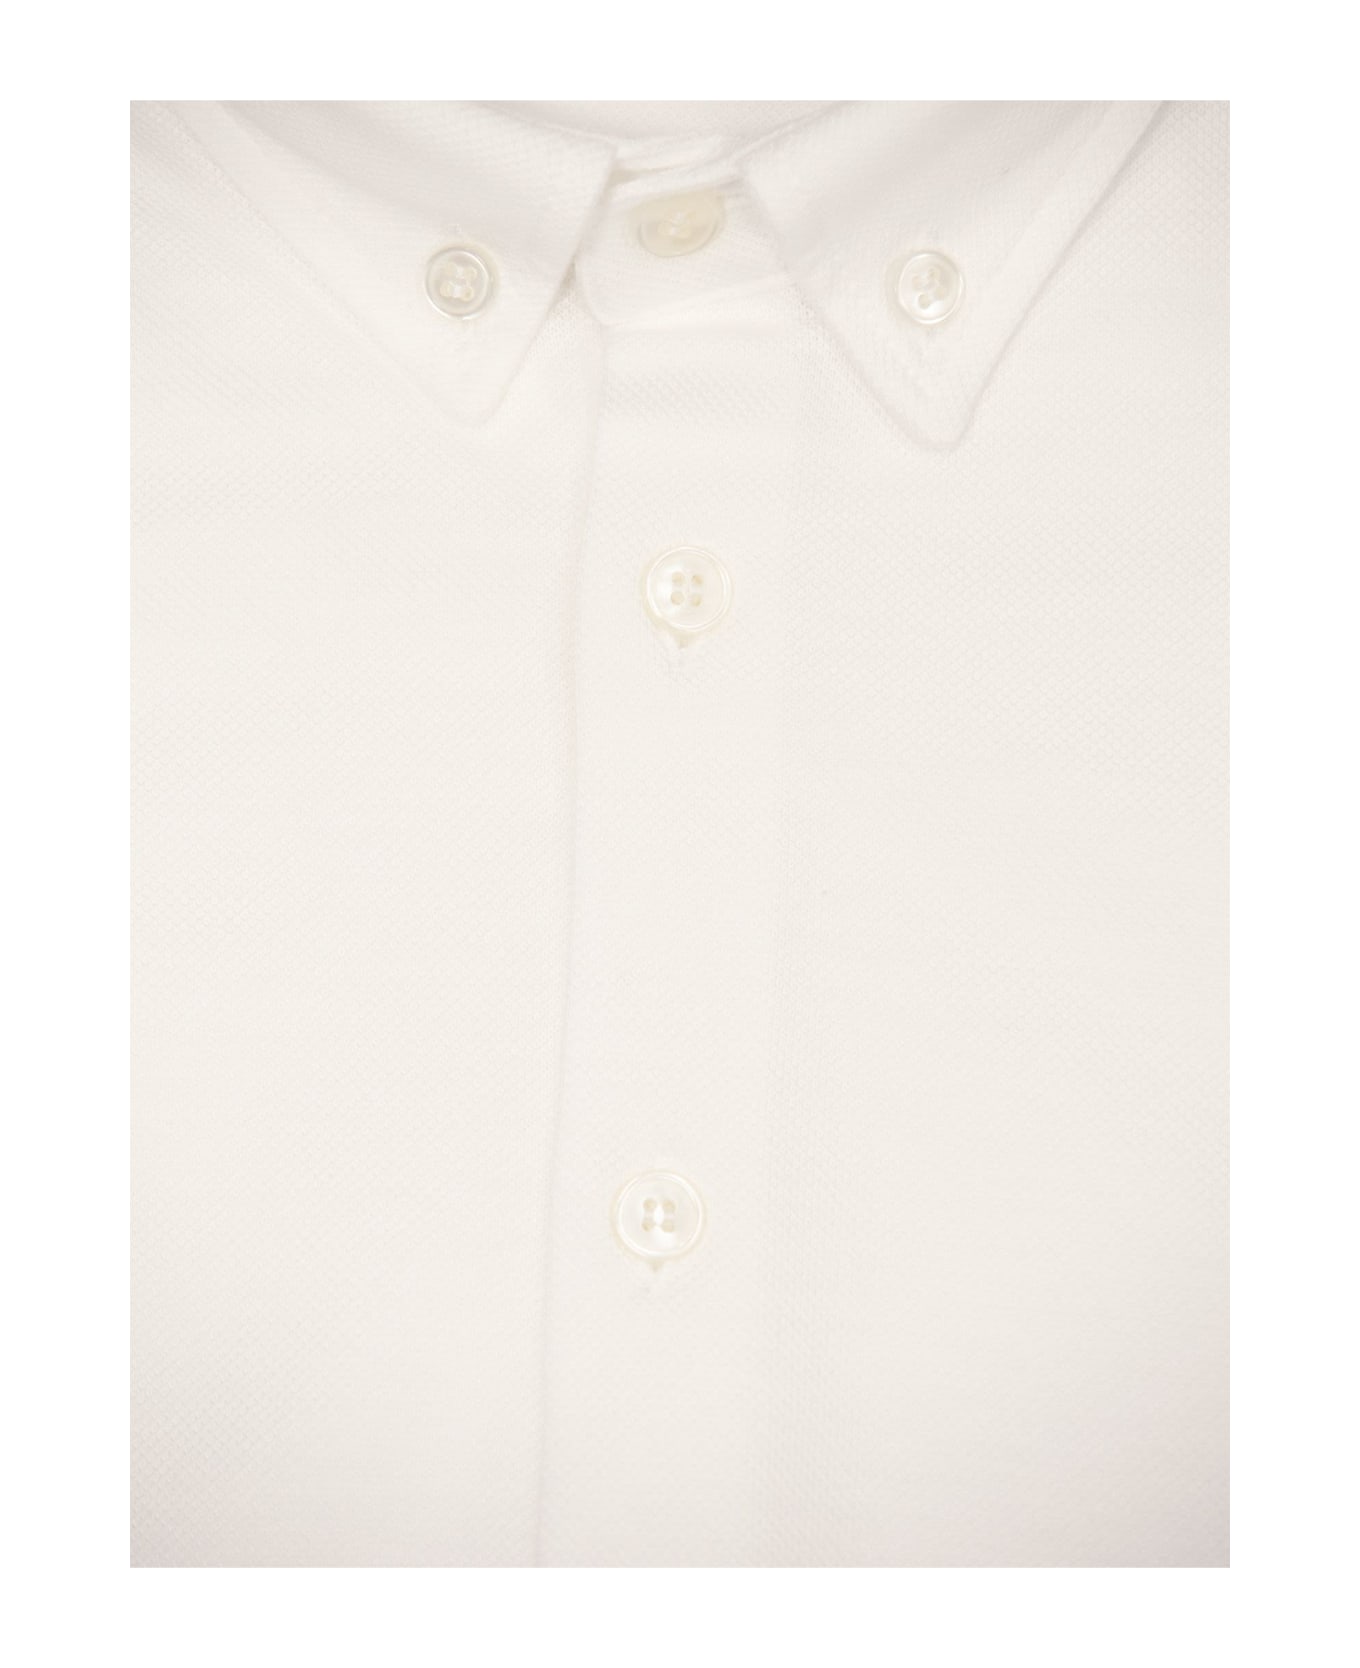 Il Gufo Regular Fit Cotton Shirt - White